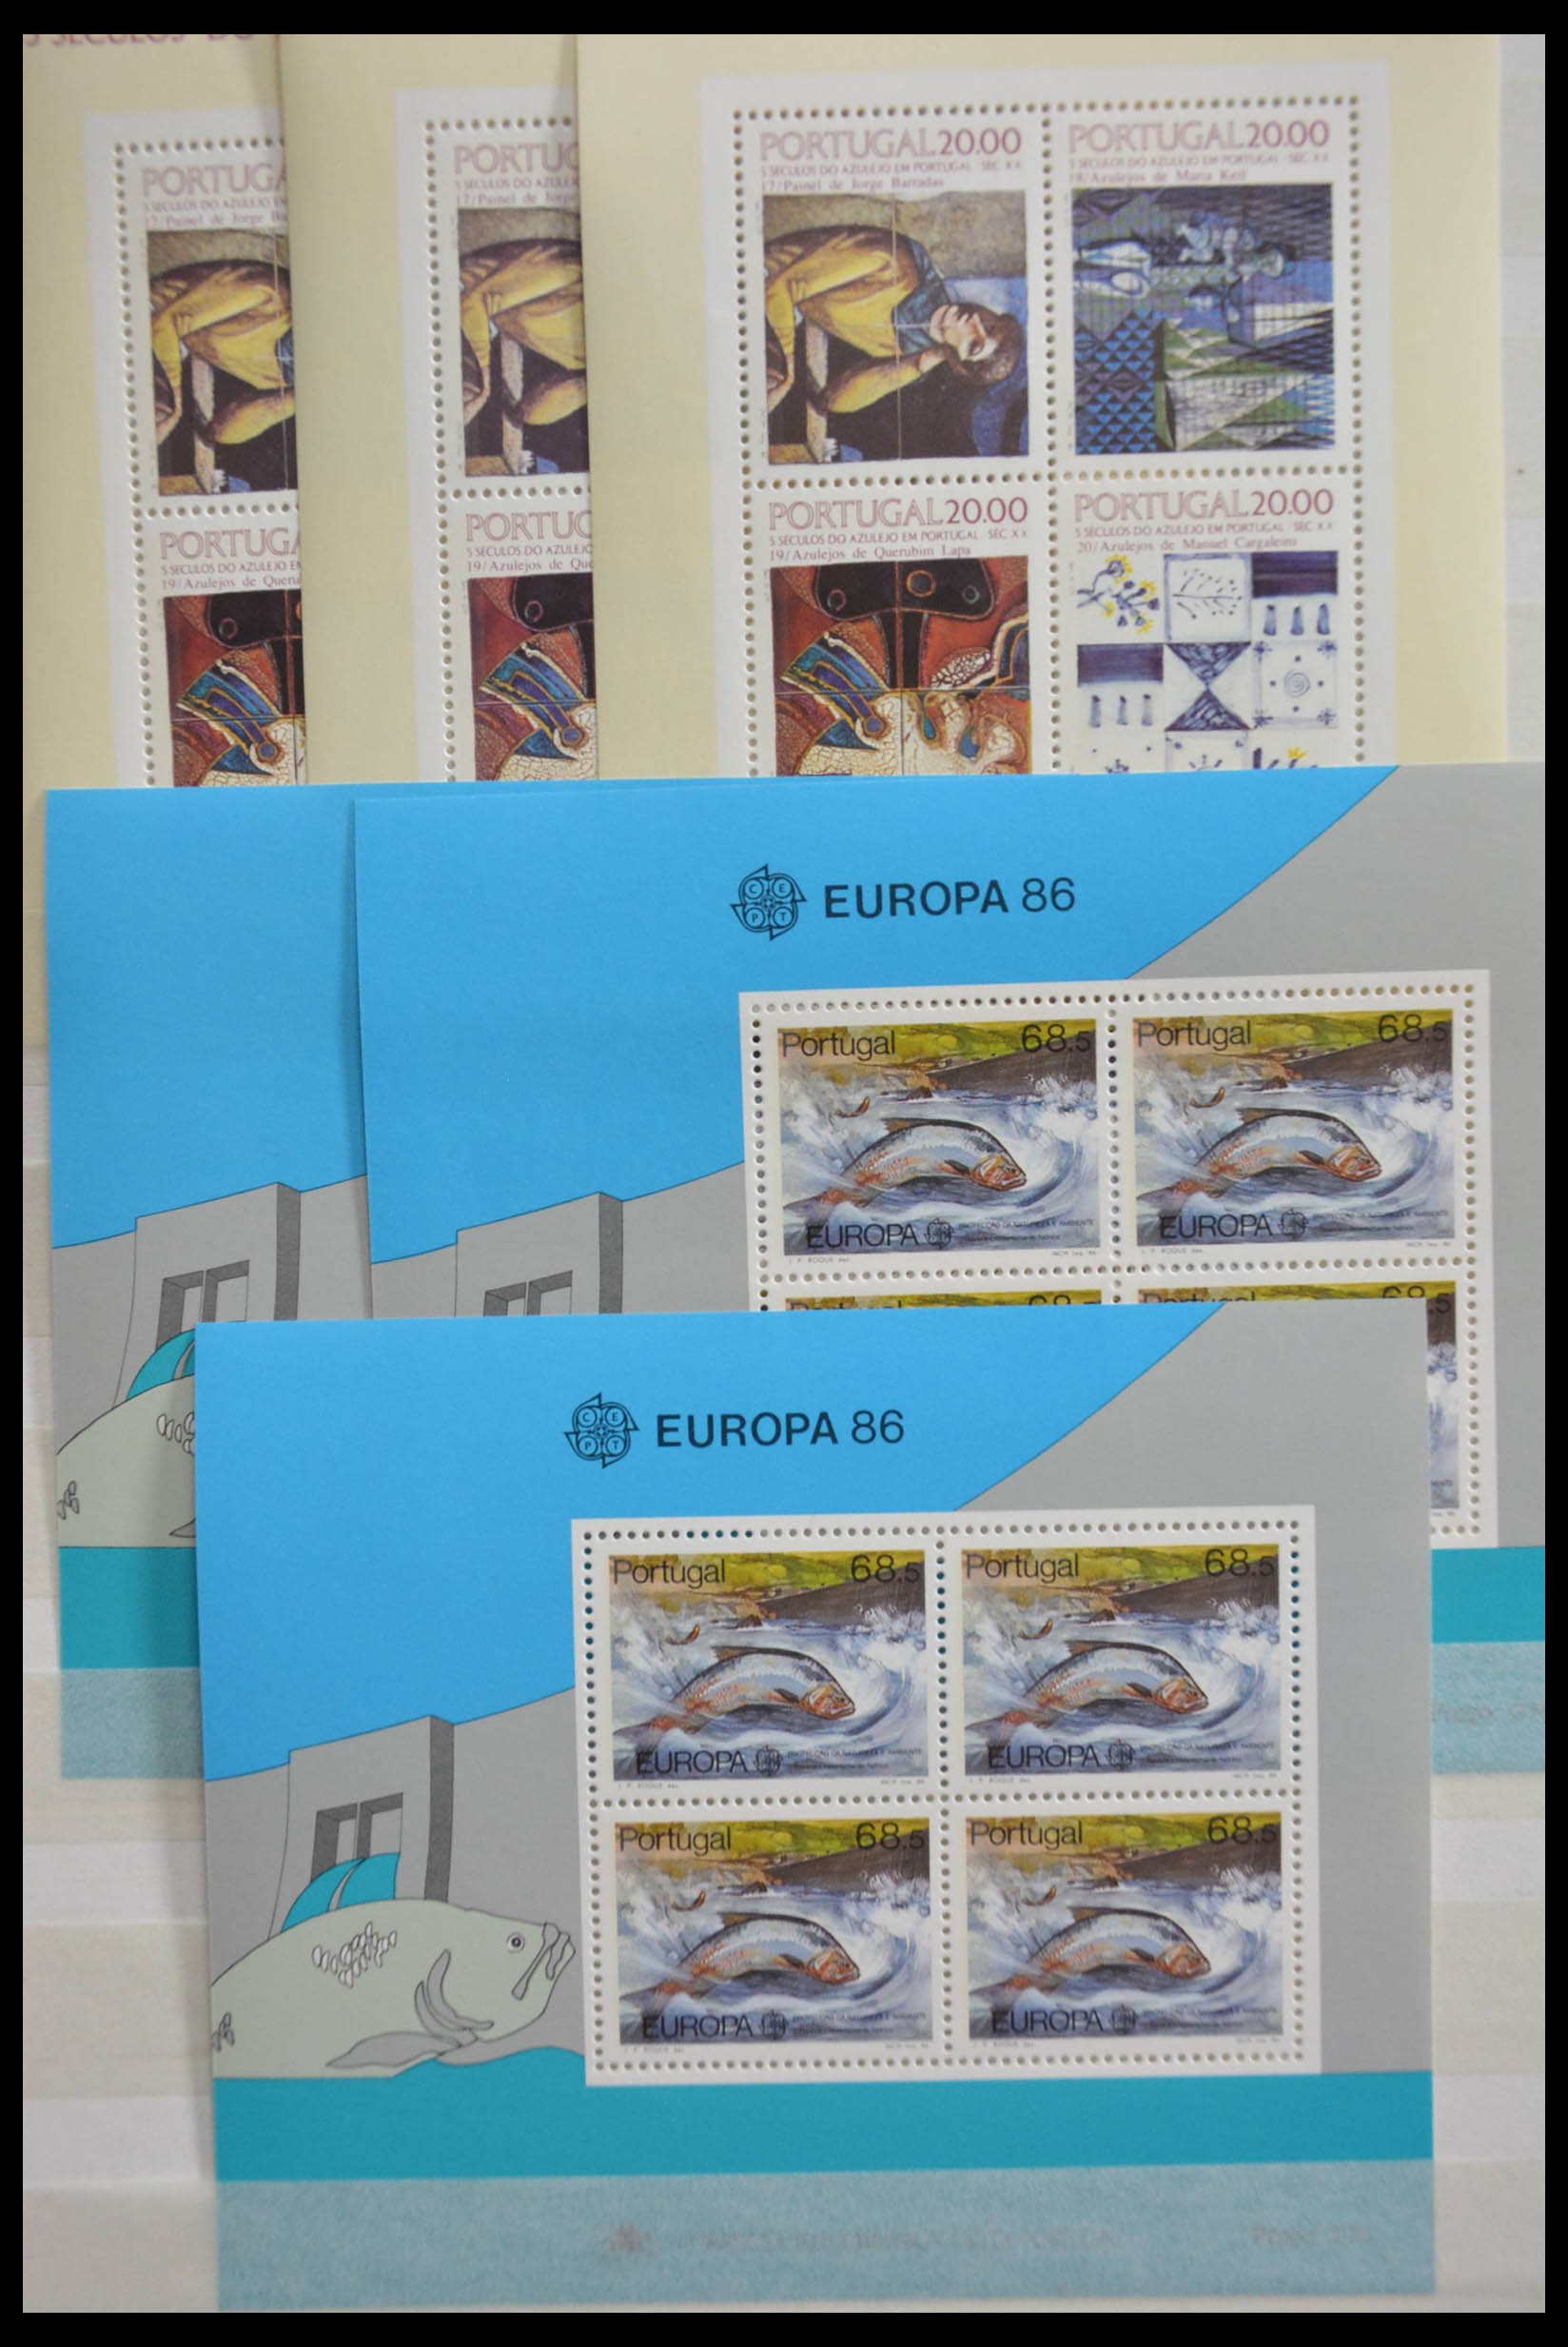 28540 008 - 28540 Portugal souvenir sheets.